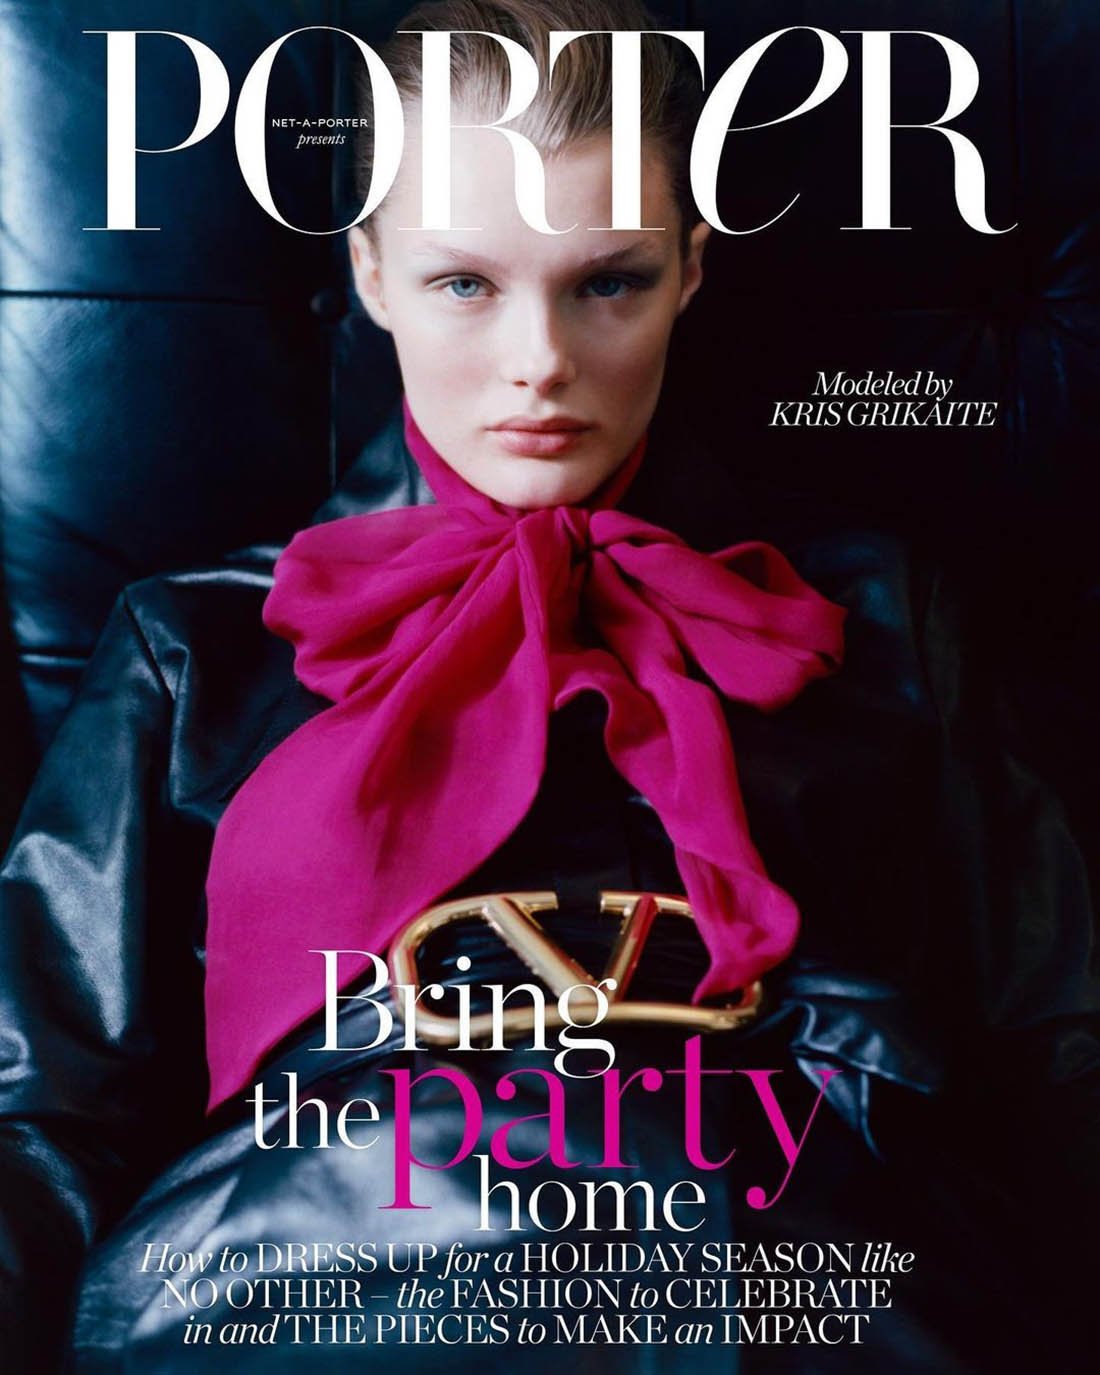 Kris-Grikaite-covers-Porter-Magazine-December-14th-2020-by-Lucie-Rox-1.jpg